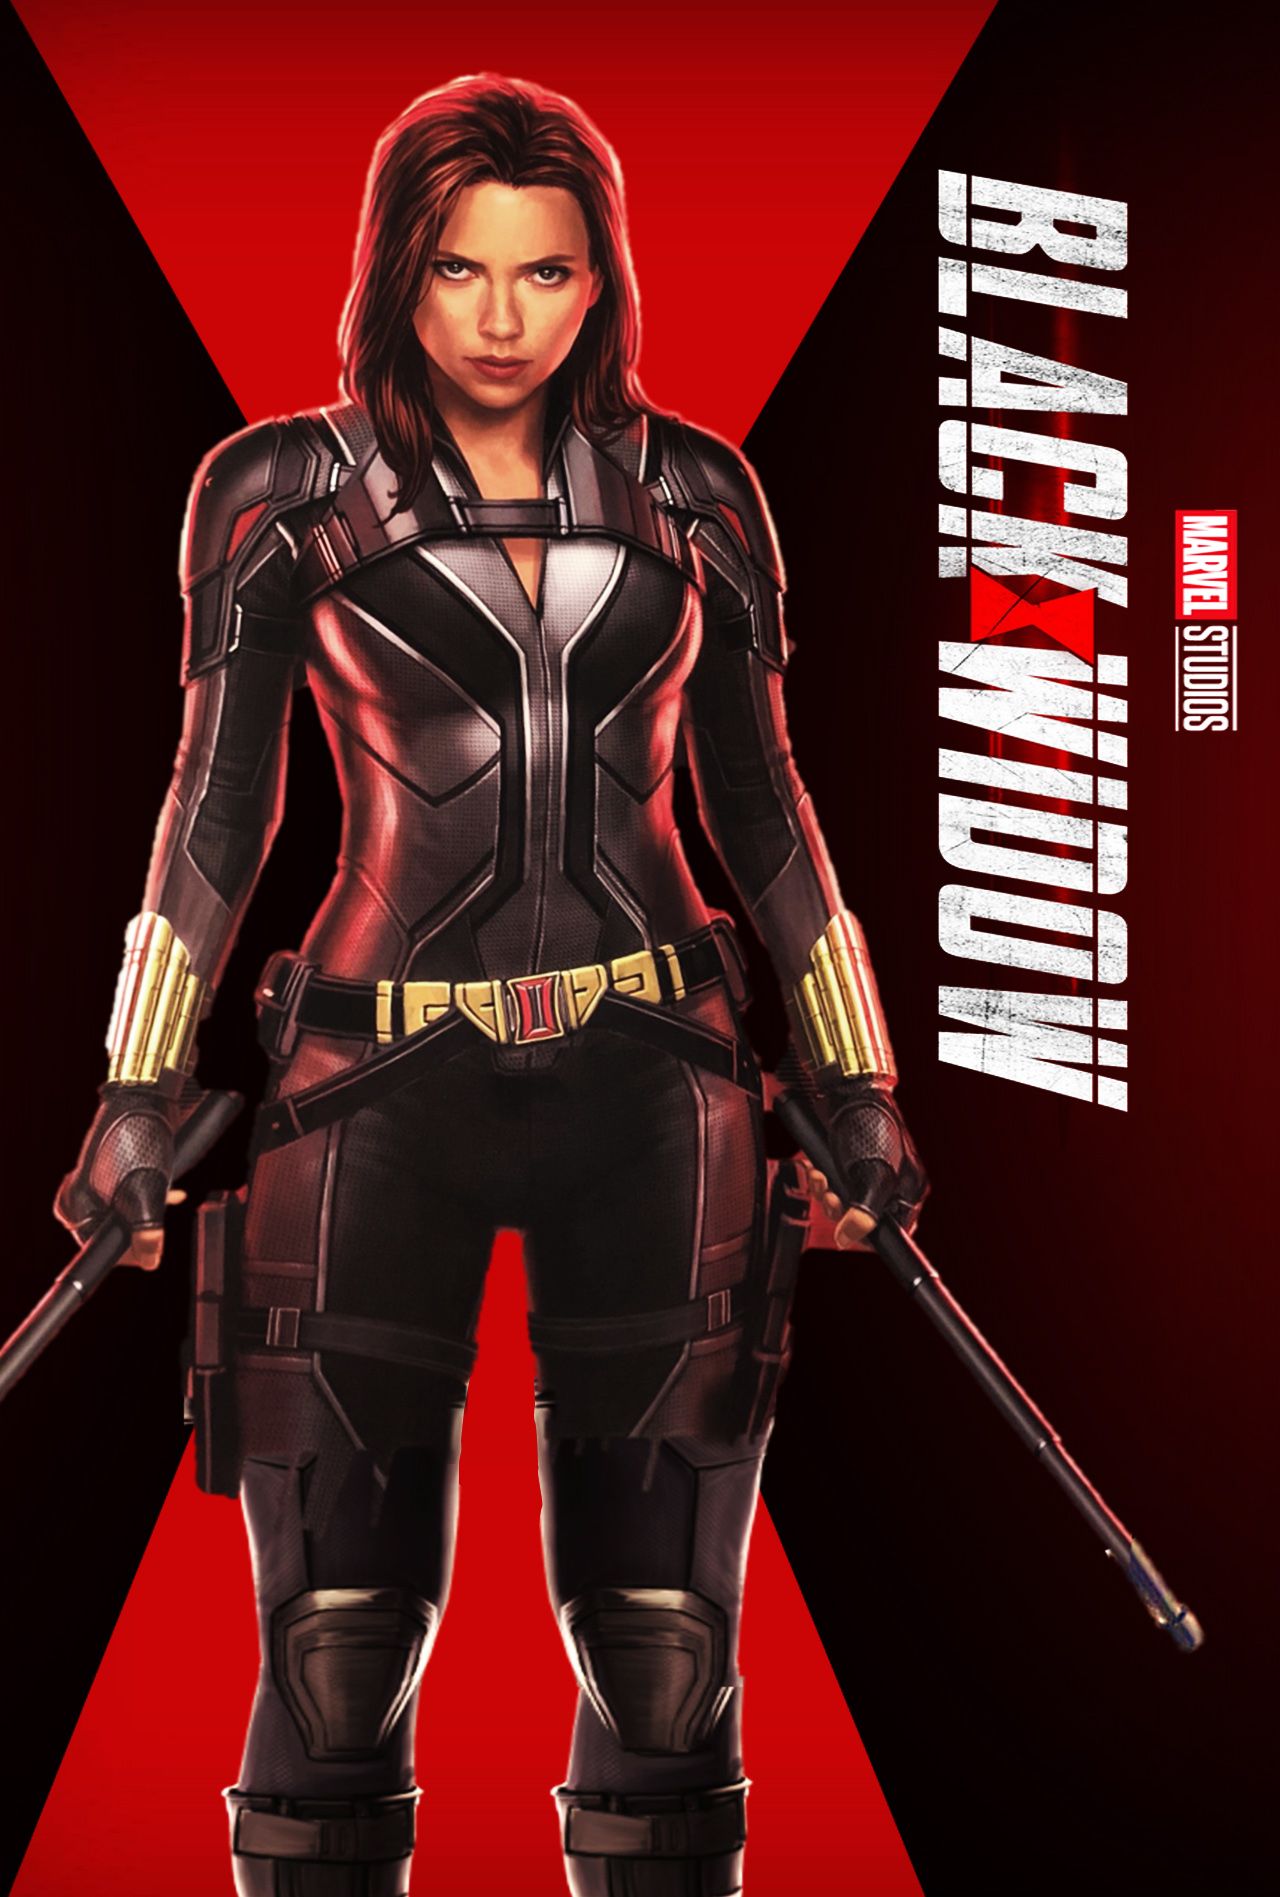 Free download Black Widow 2020 Poster by The Dark Mamba 995